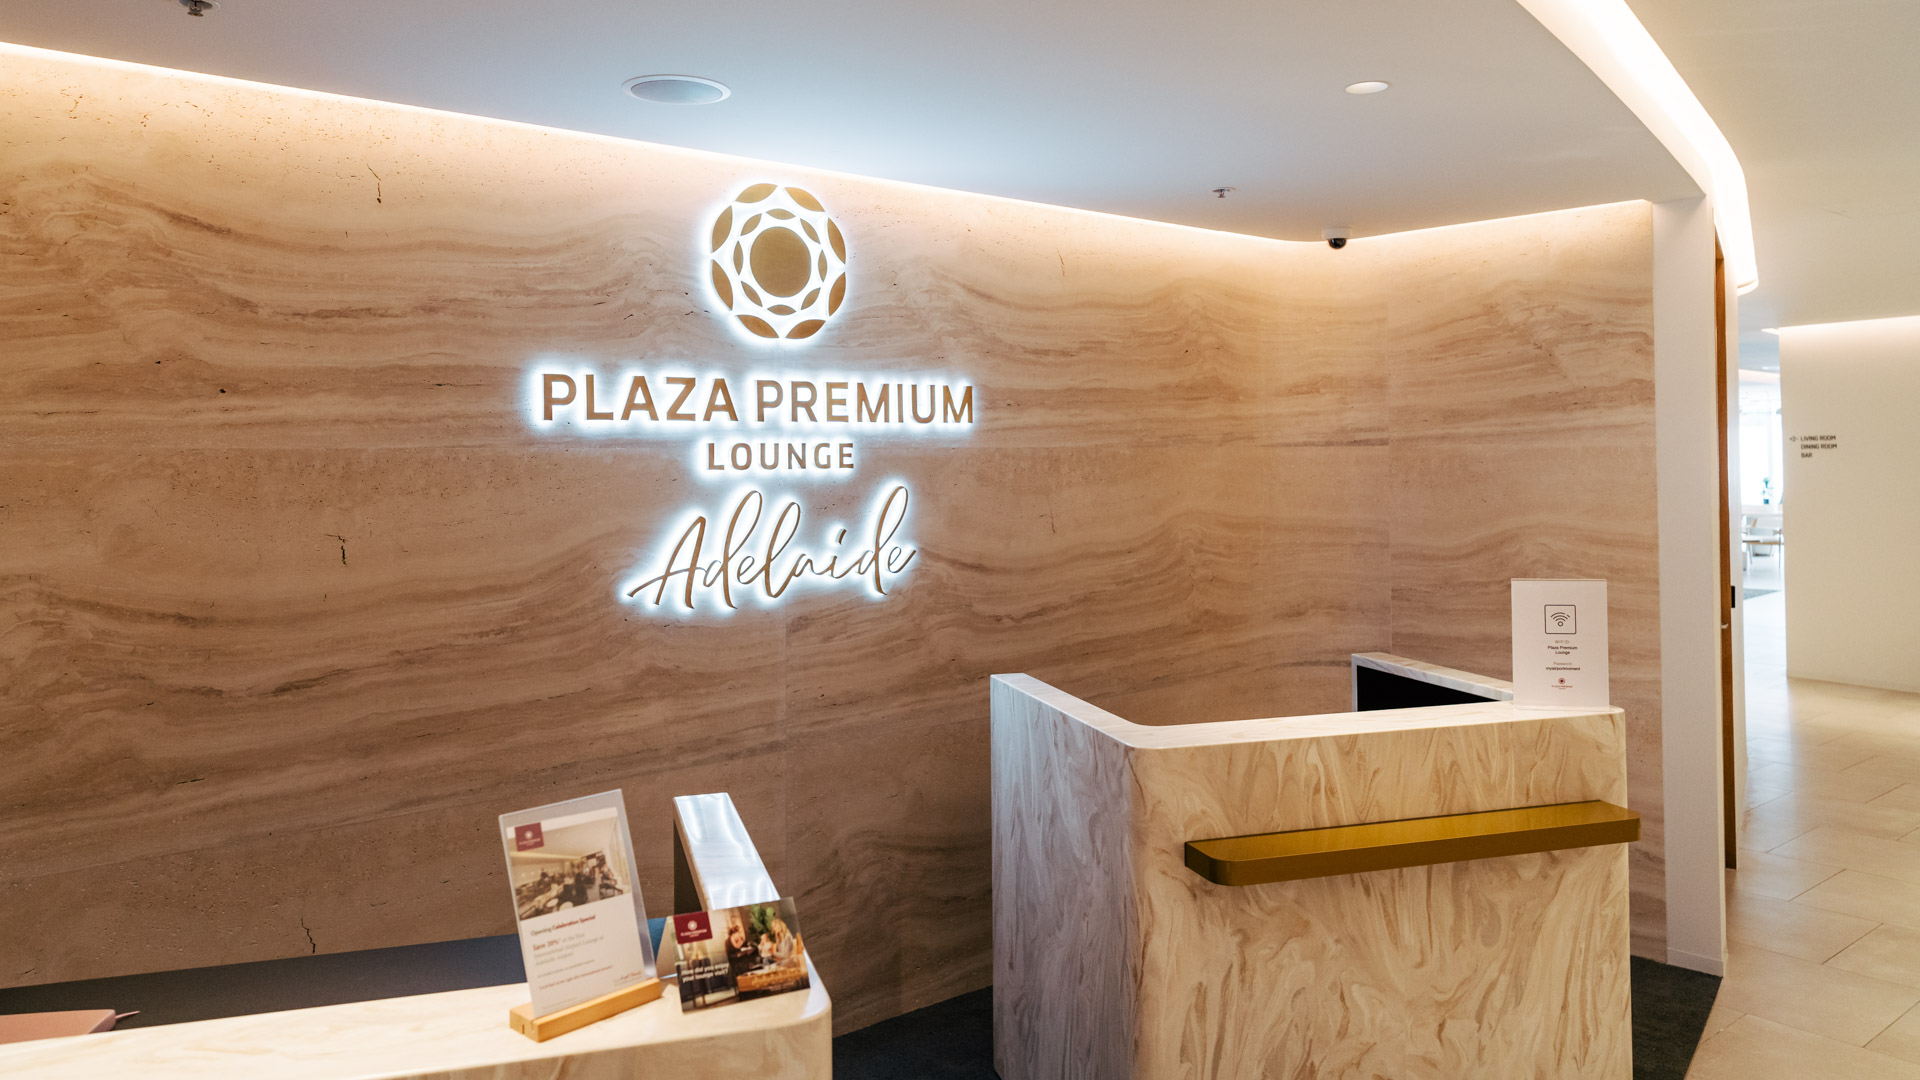 Plaza Premium Adelaide entrance